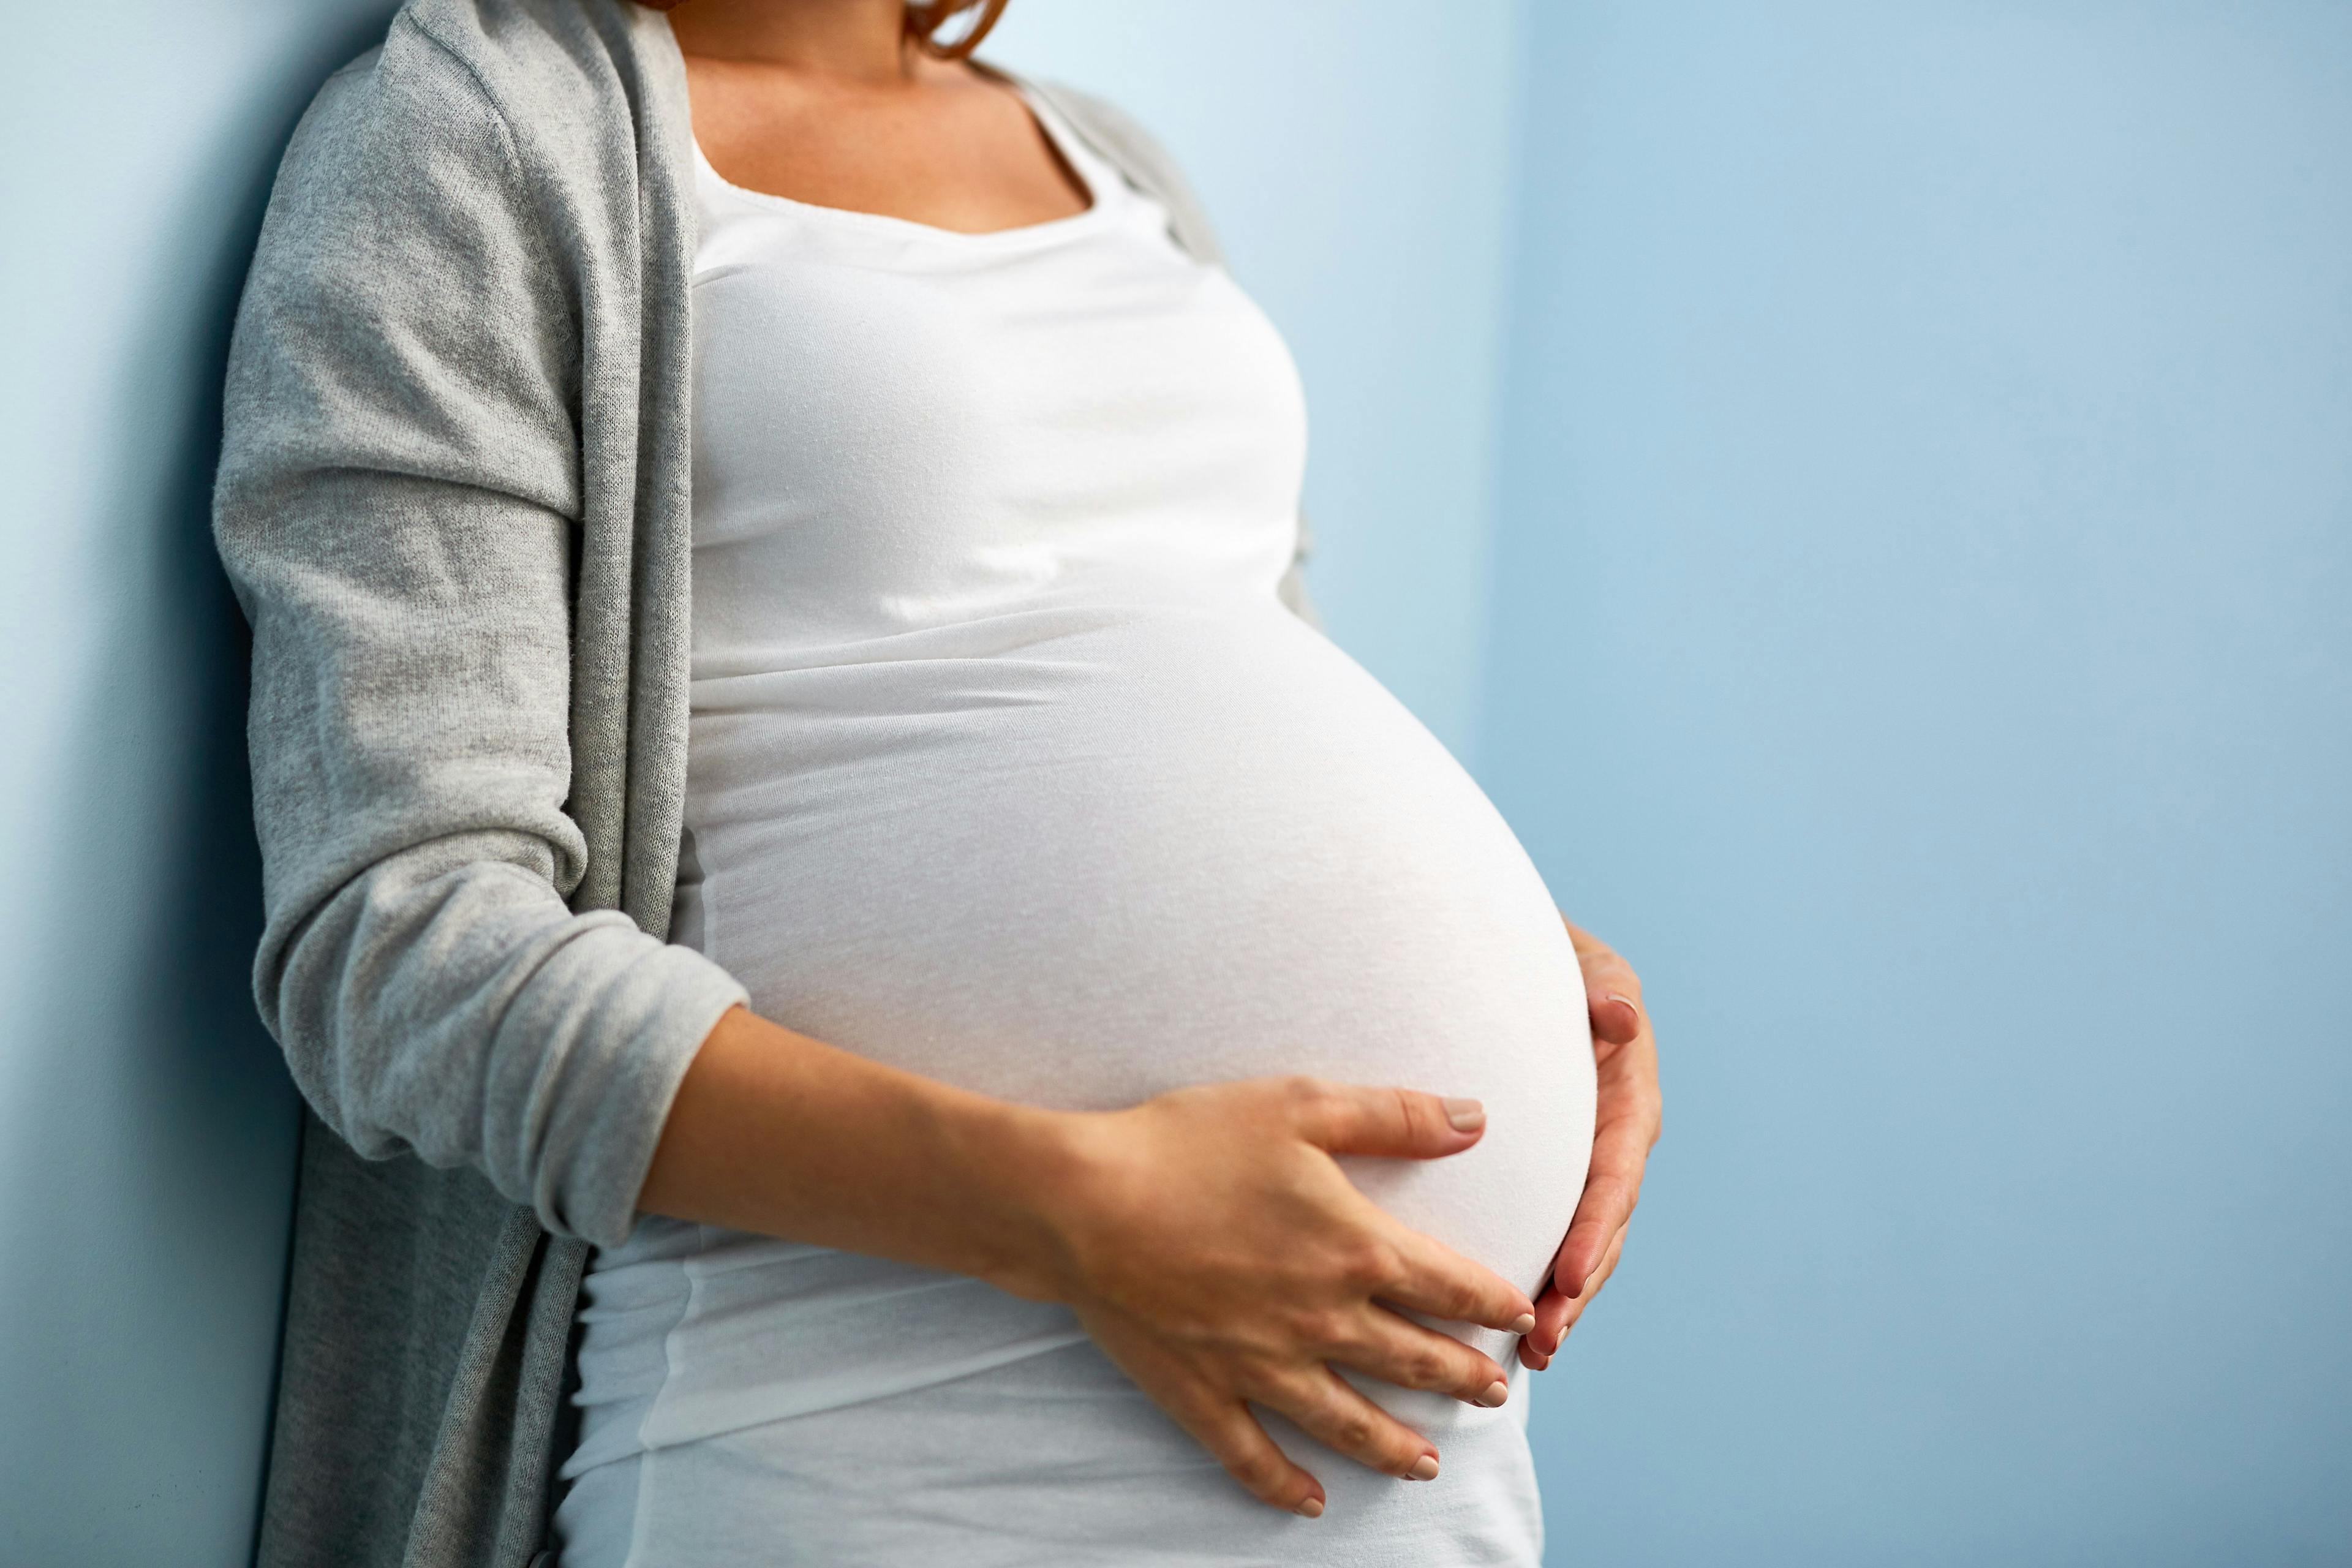 Pregnant Woman | pressmaster - stock.adobe.com